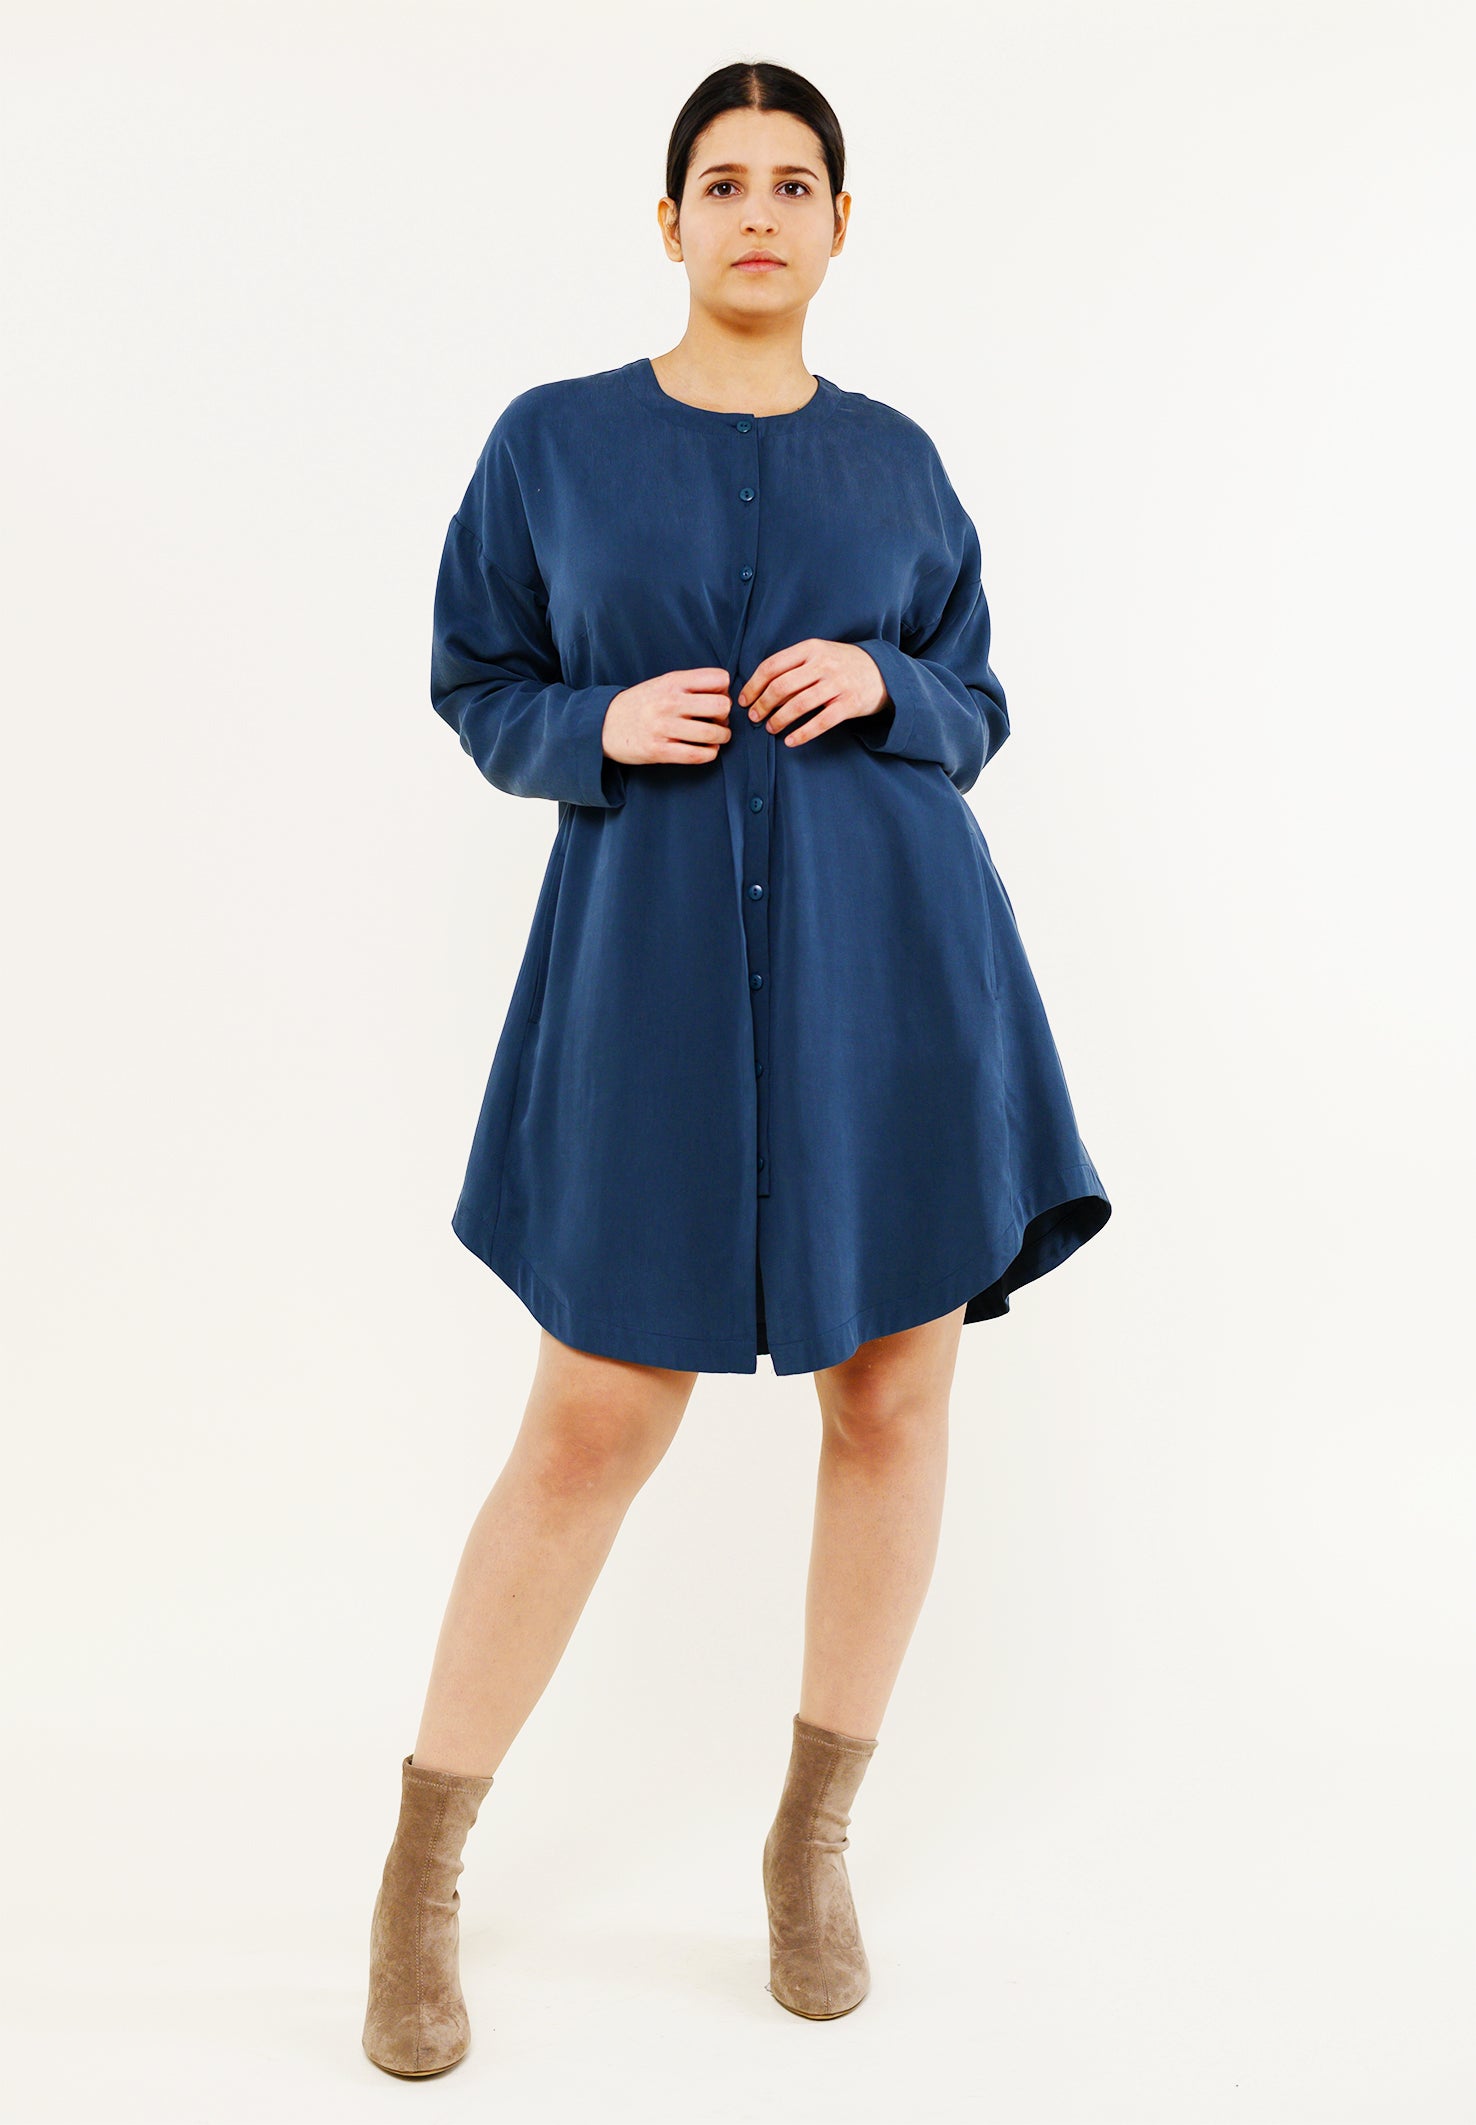 Oversize shirt dress "FII-NE" in blue made of Tencel